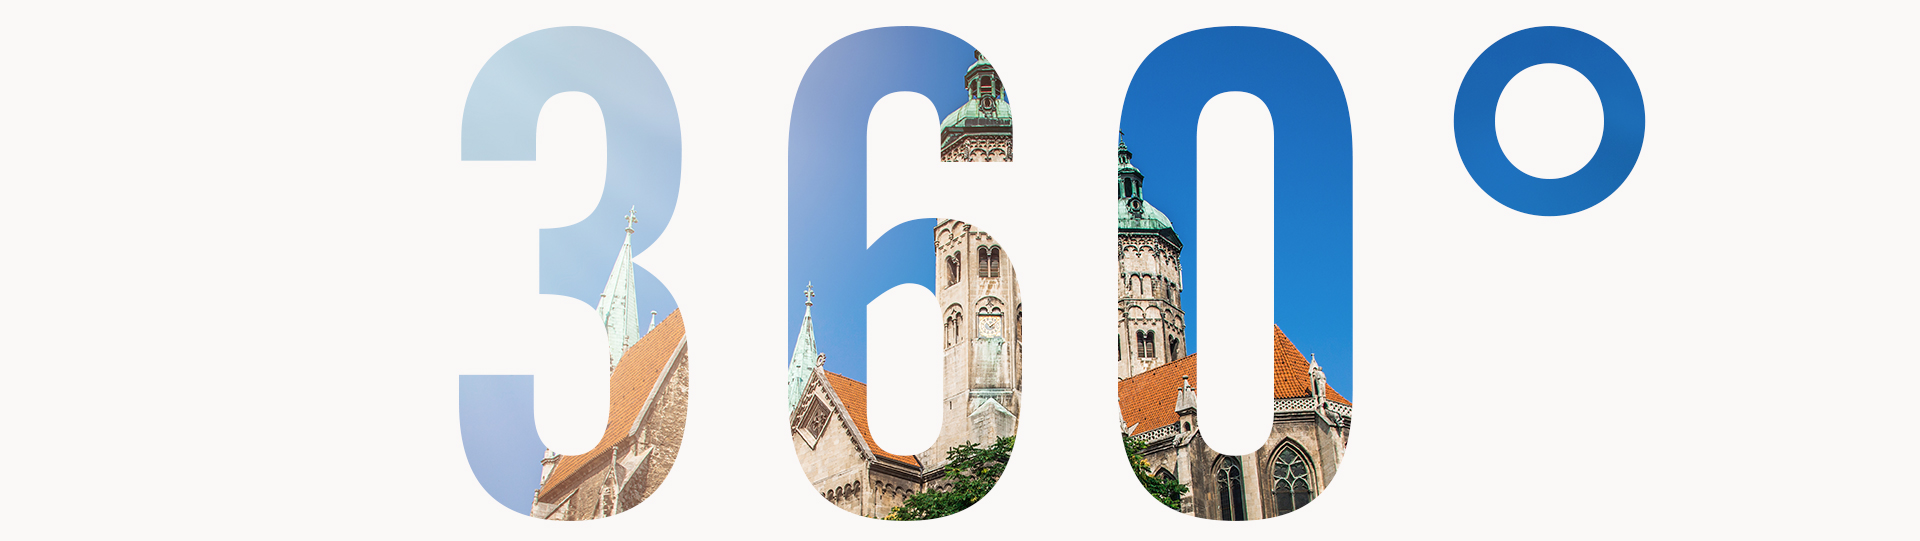 360° Panorama Naumburg Cathedral